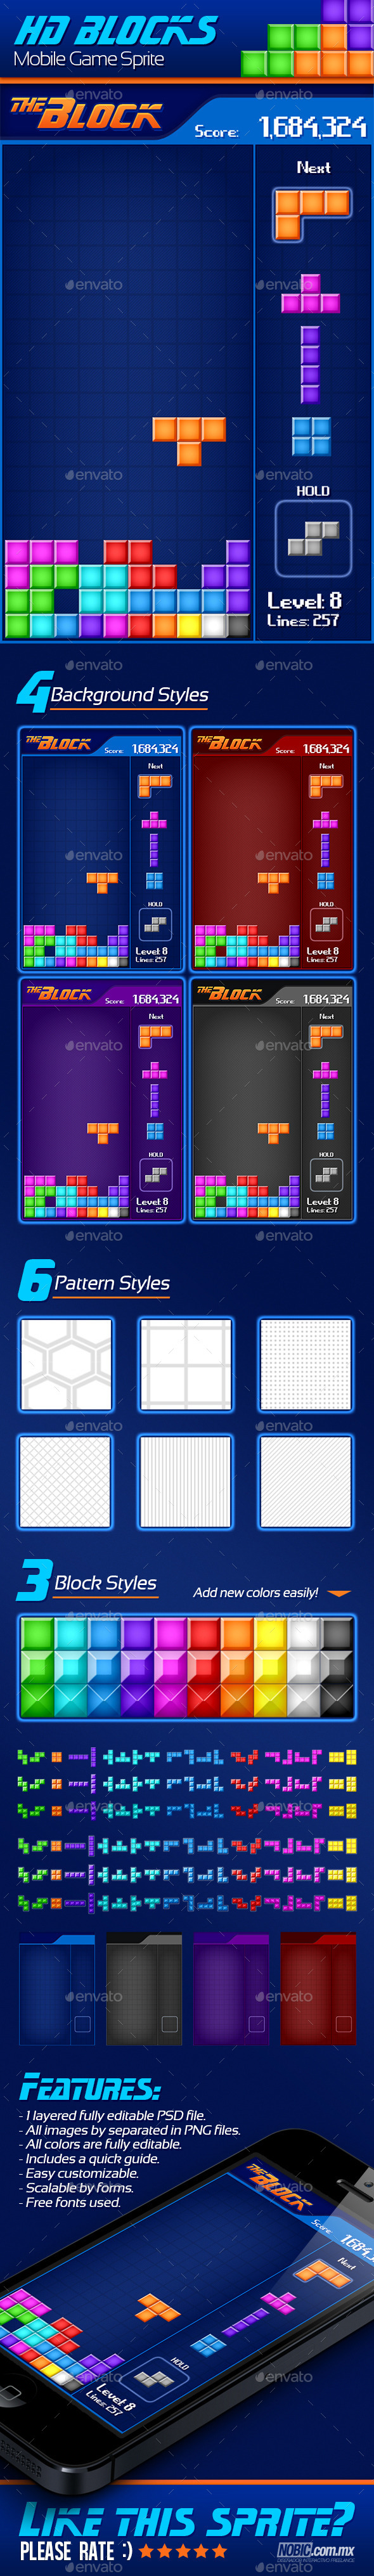 Tetris Mobile Game Sprite